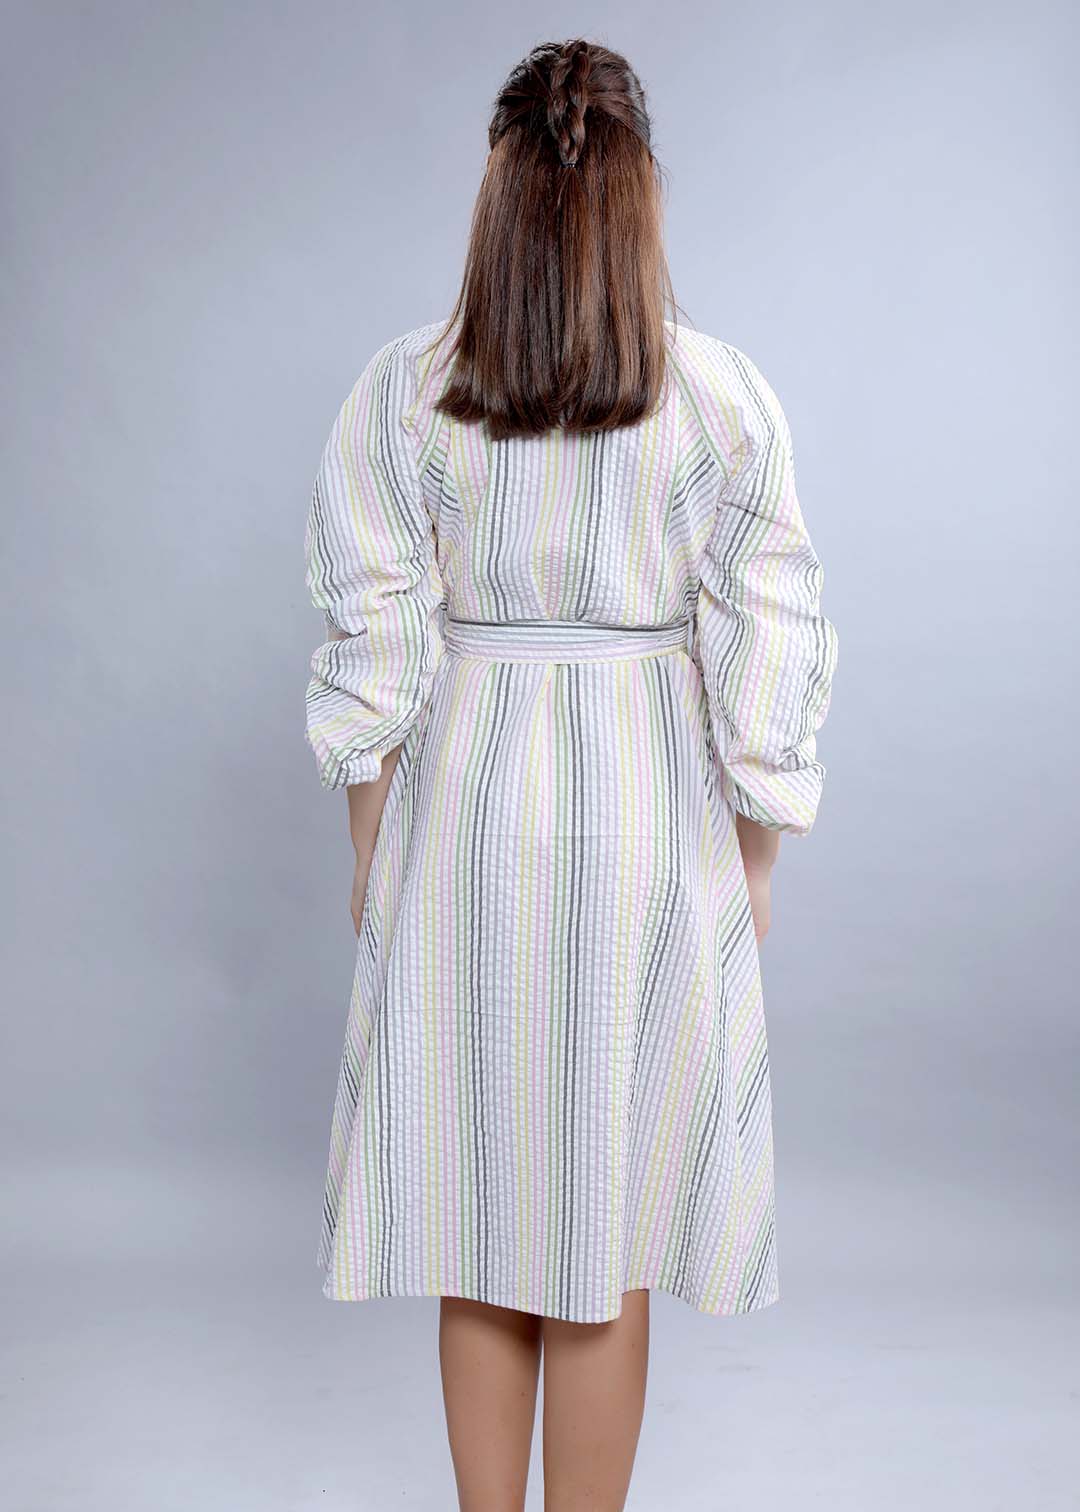 White Seer Sucker Stripe A-Line Dress